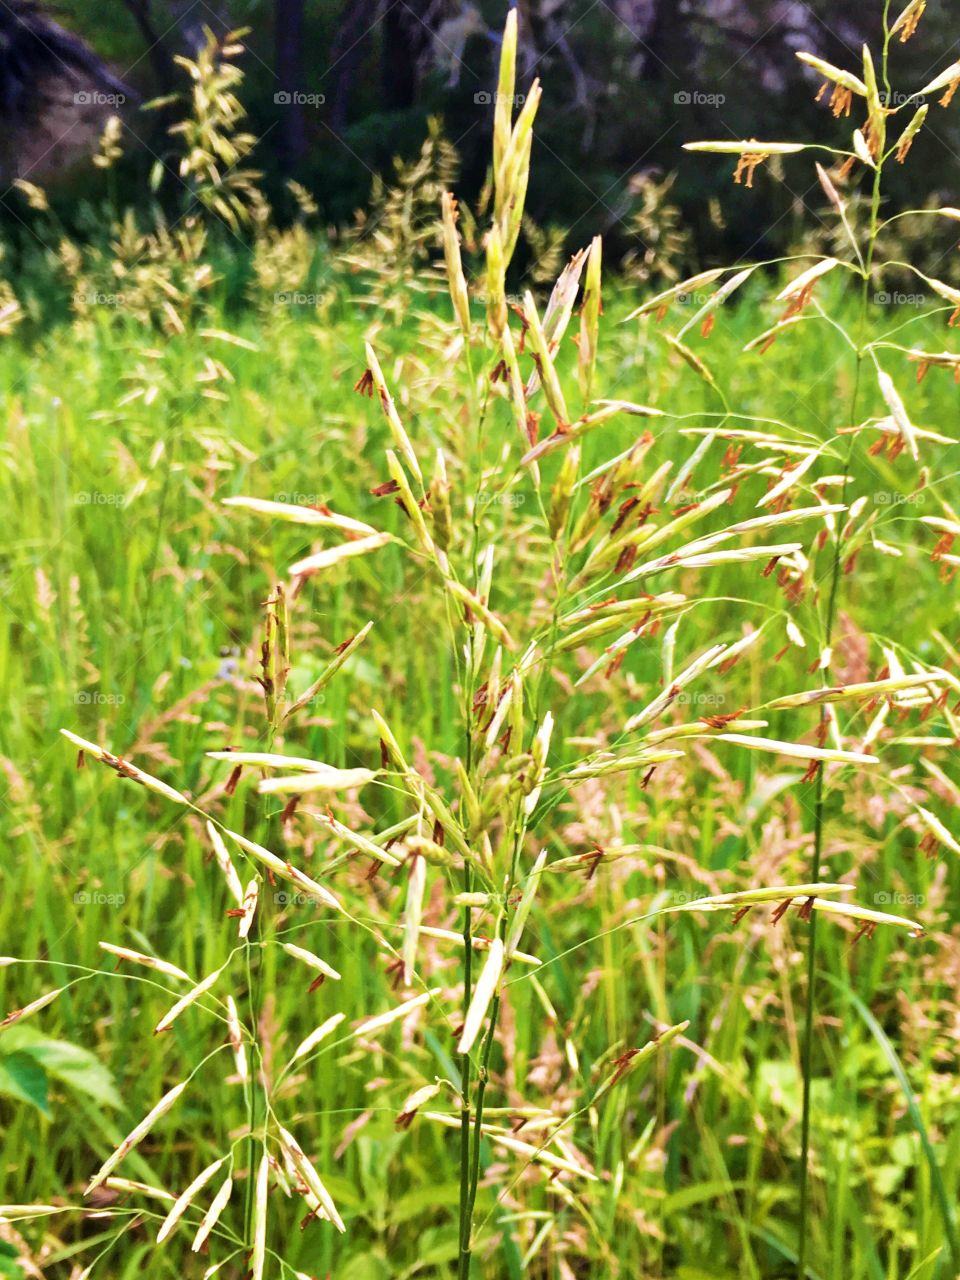 Seeded Grass